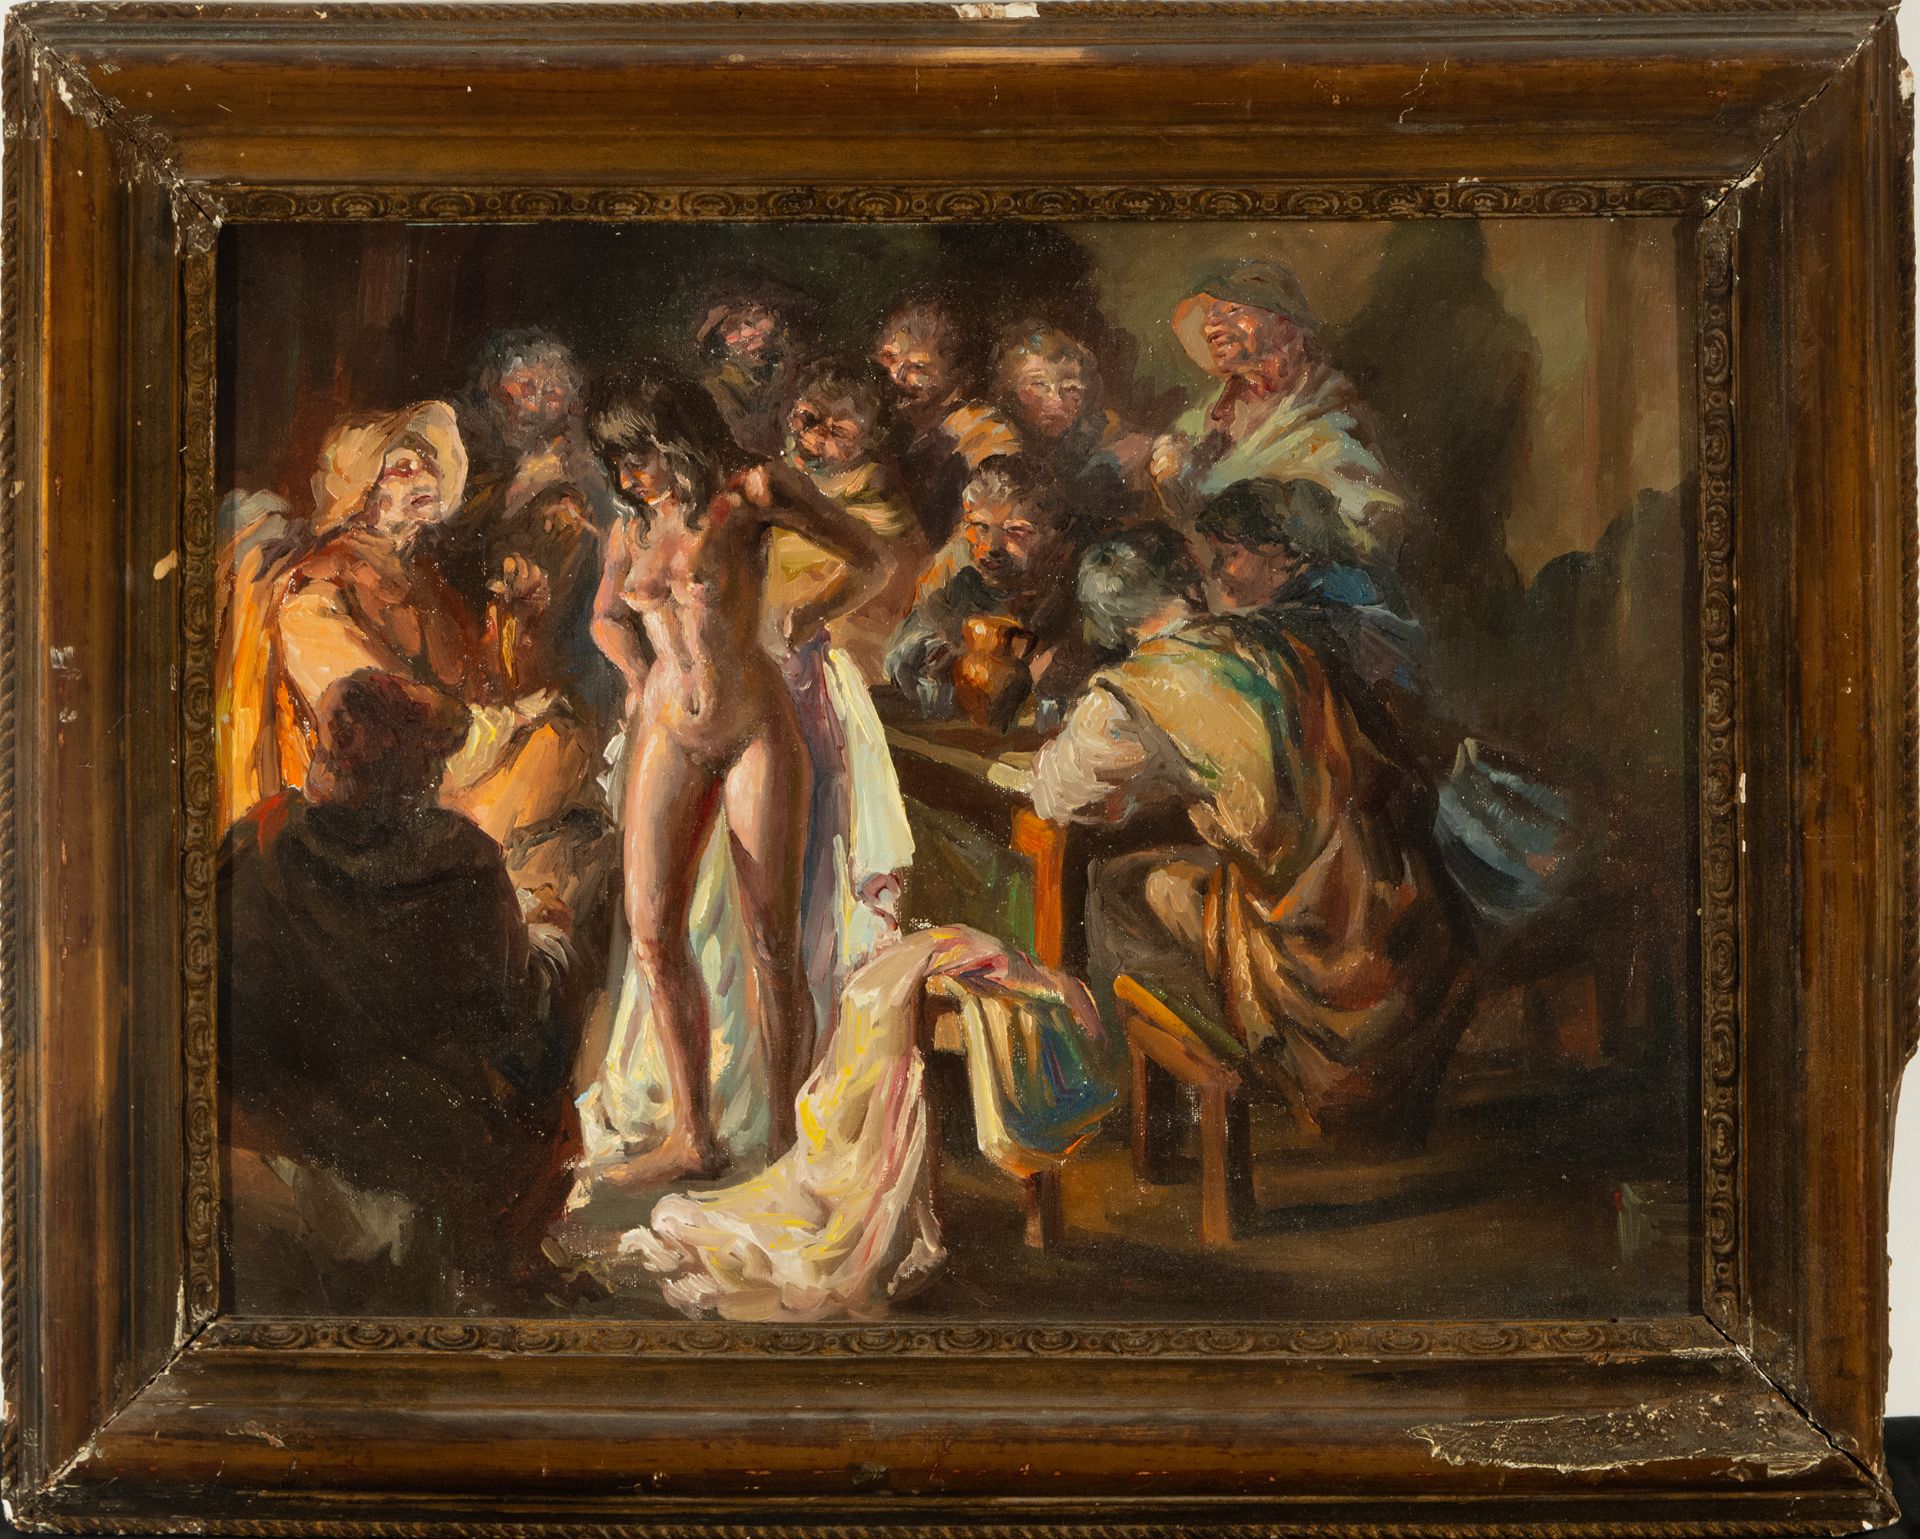 Nude woman dancing, 20th century European Post-Impressionist school